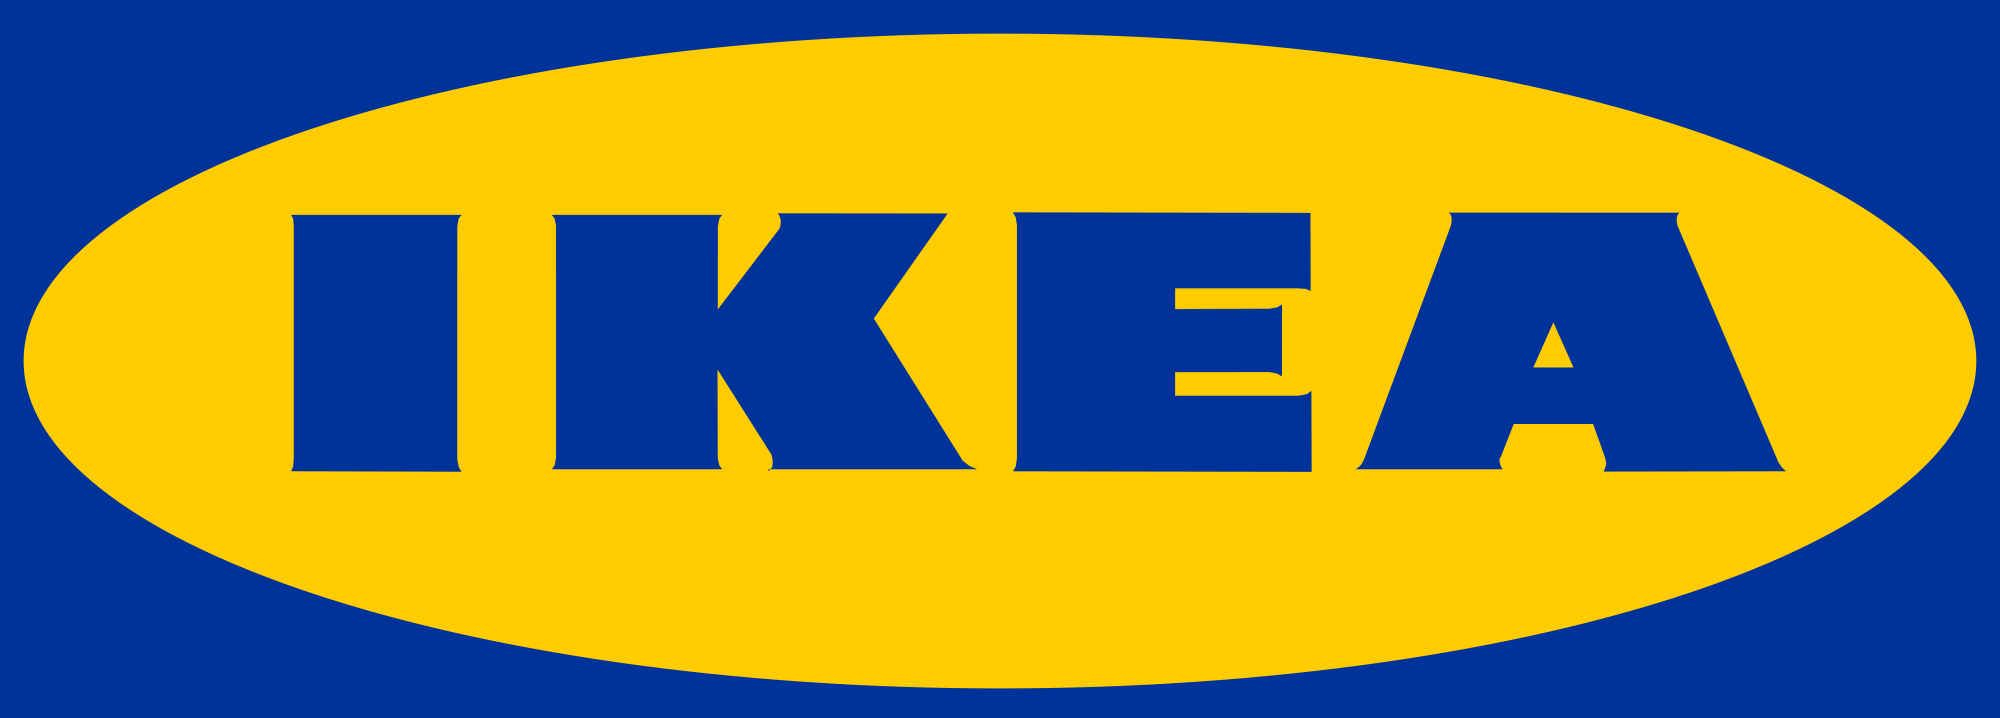 Ikea_logo.svg.png